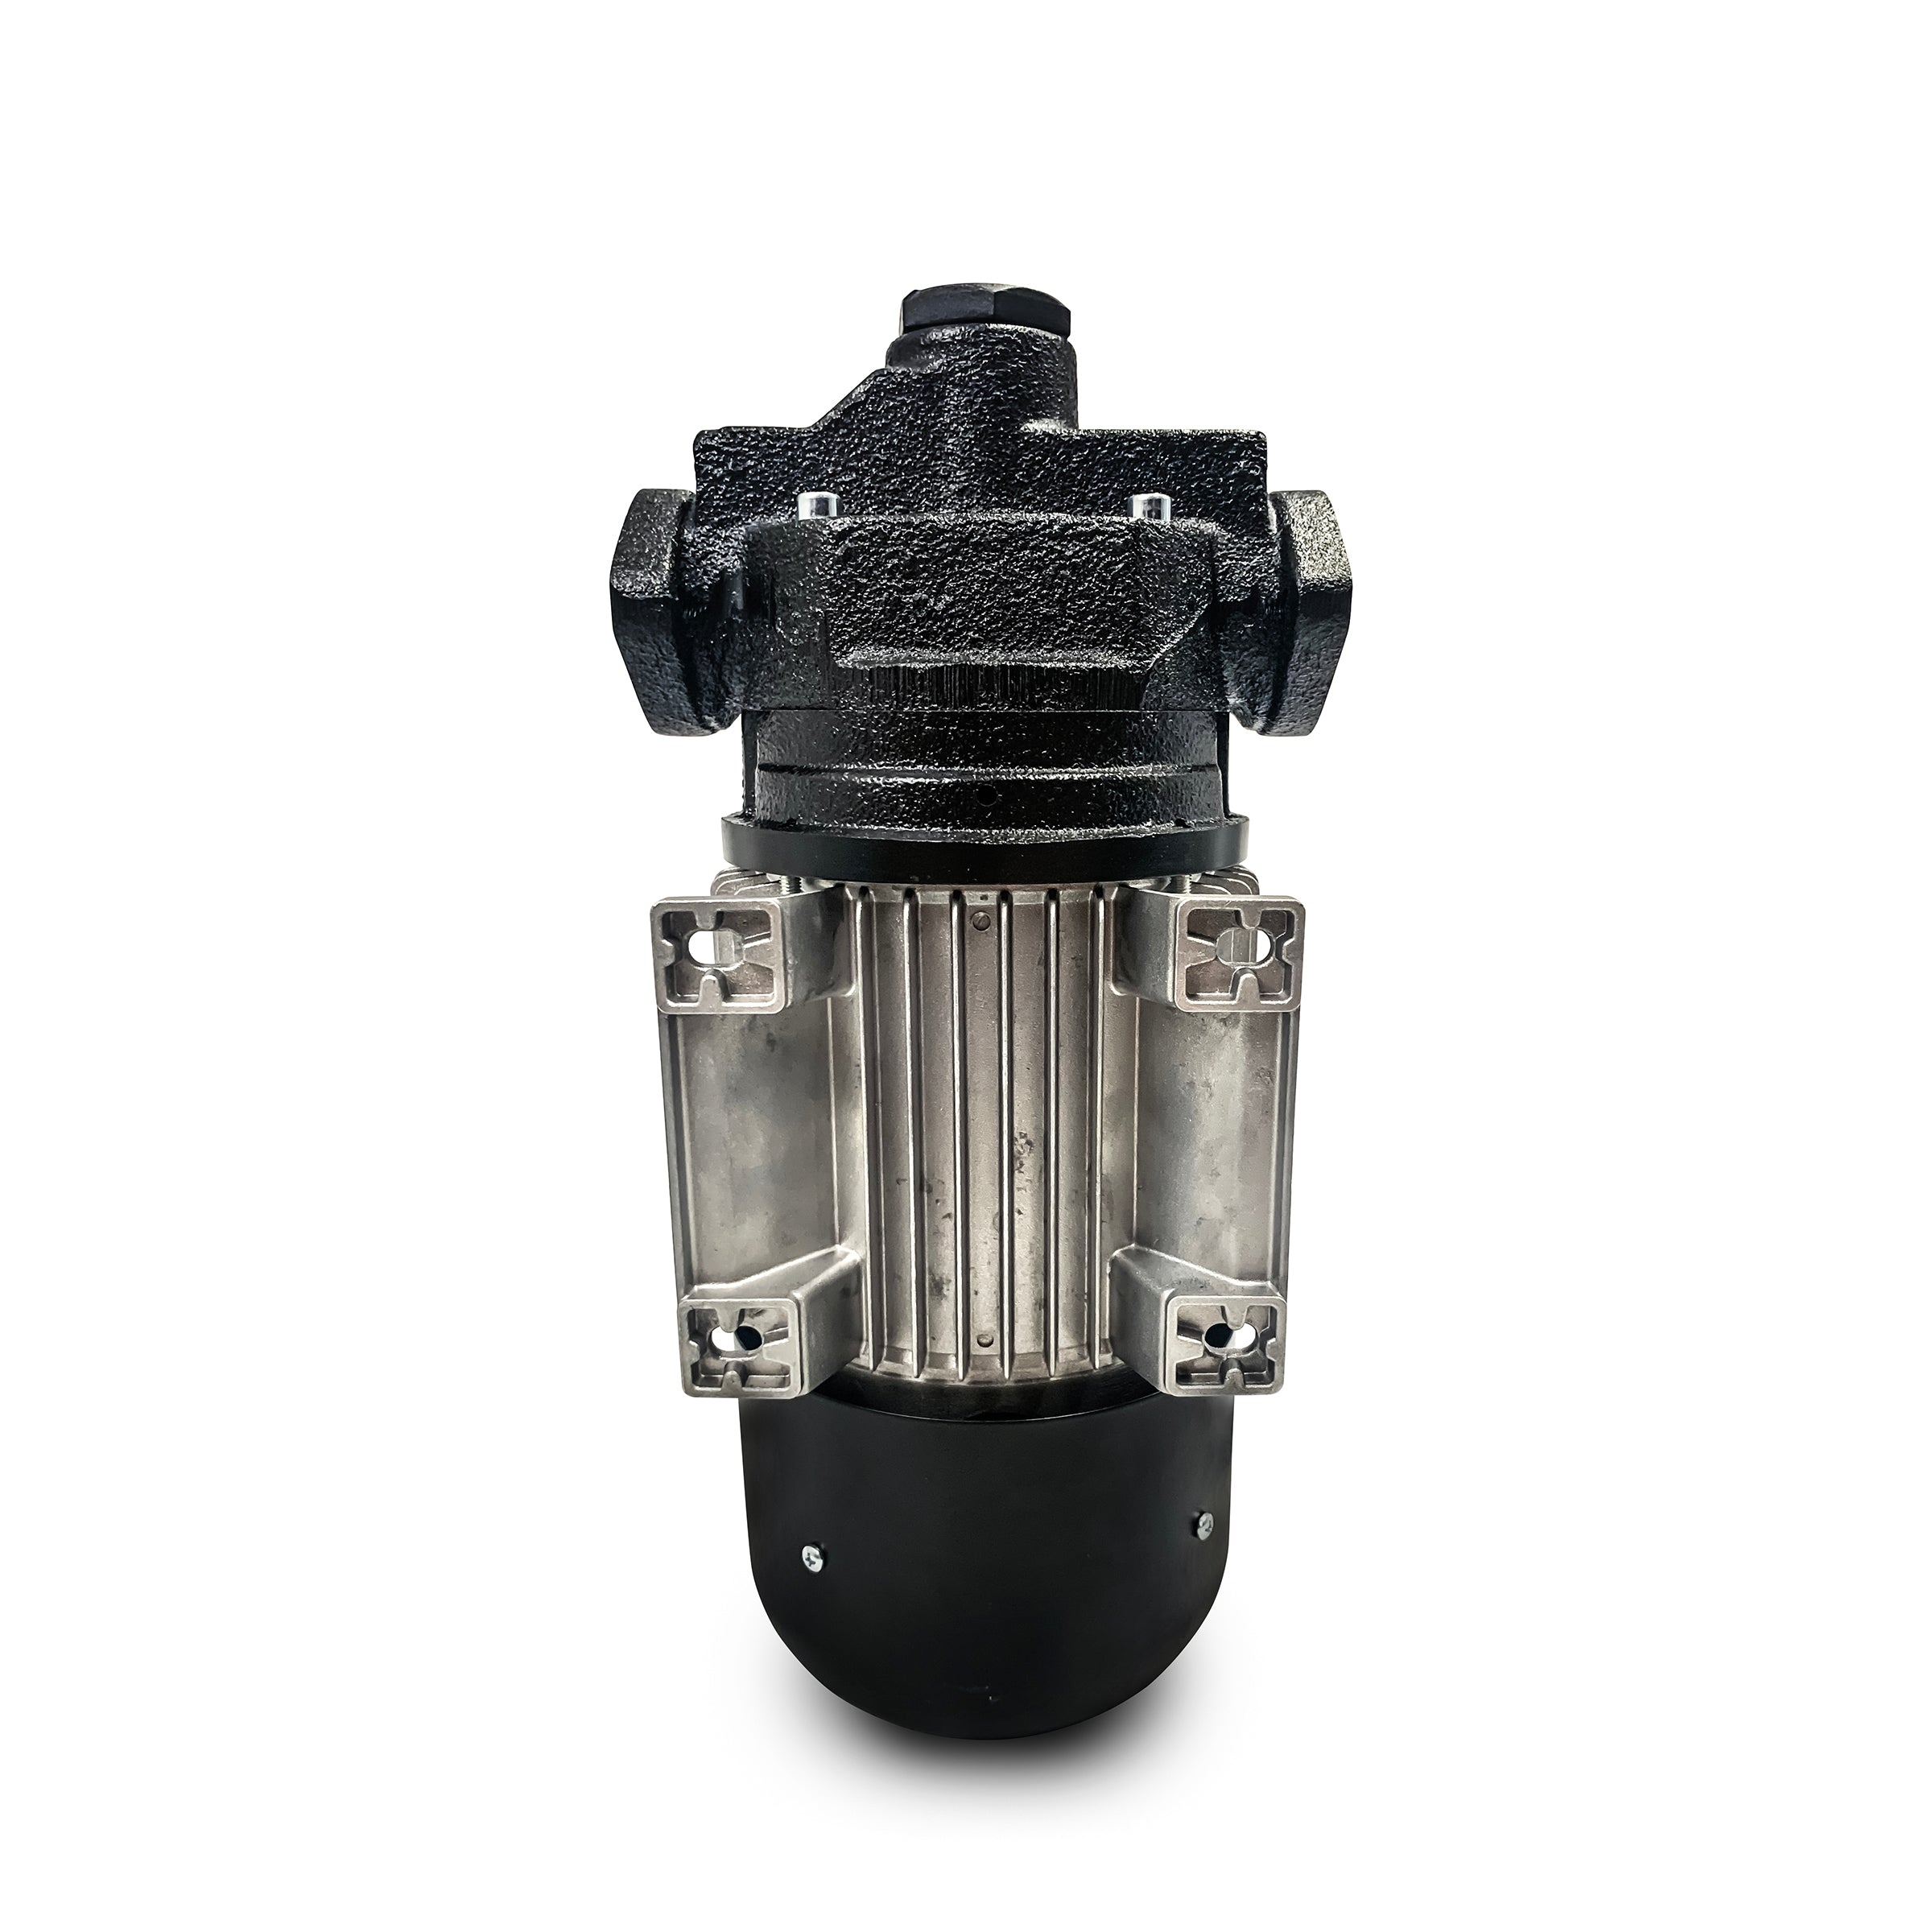 Gespasa CG-150 Fuel Transfer Pump 100-500 L/min — Scintex Australia